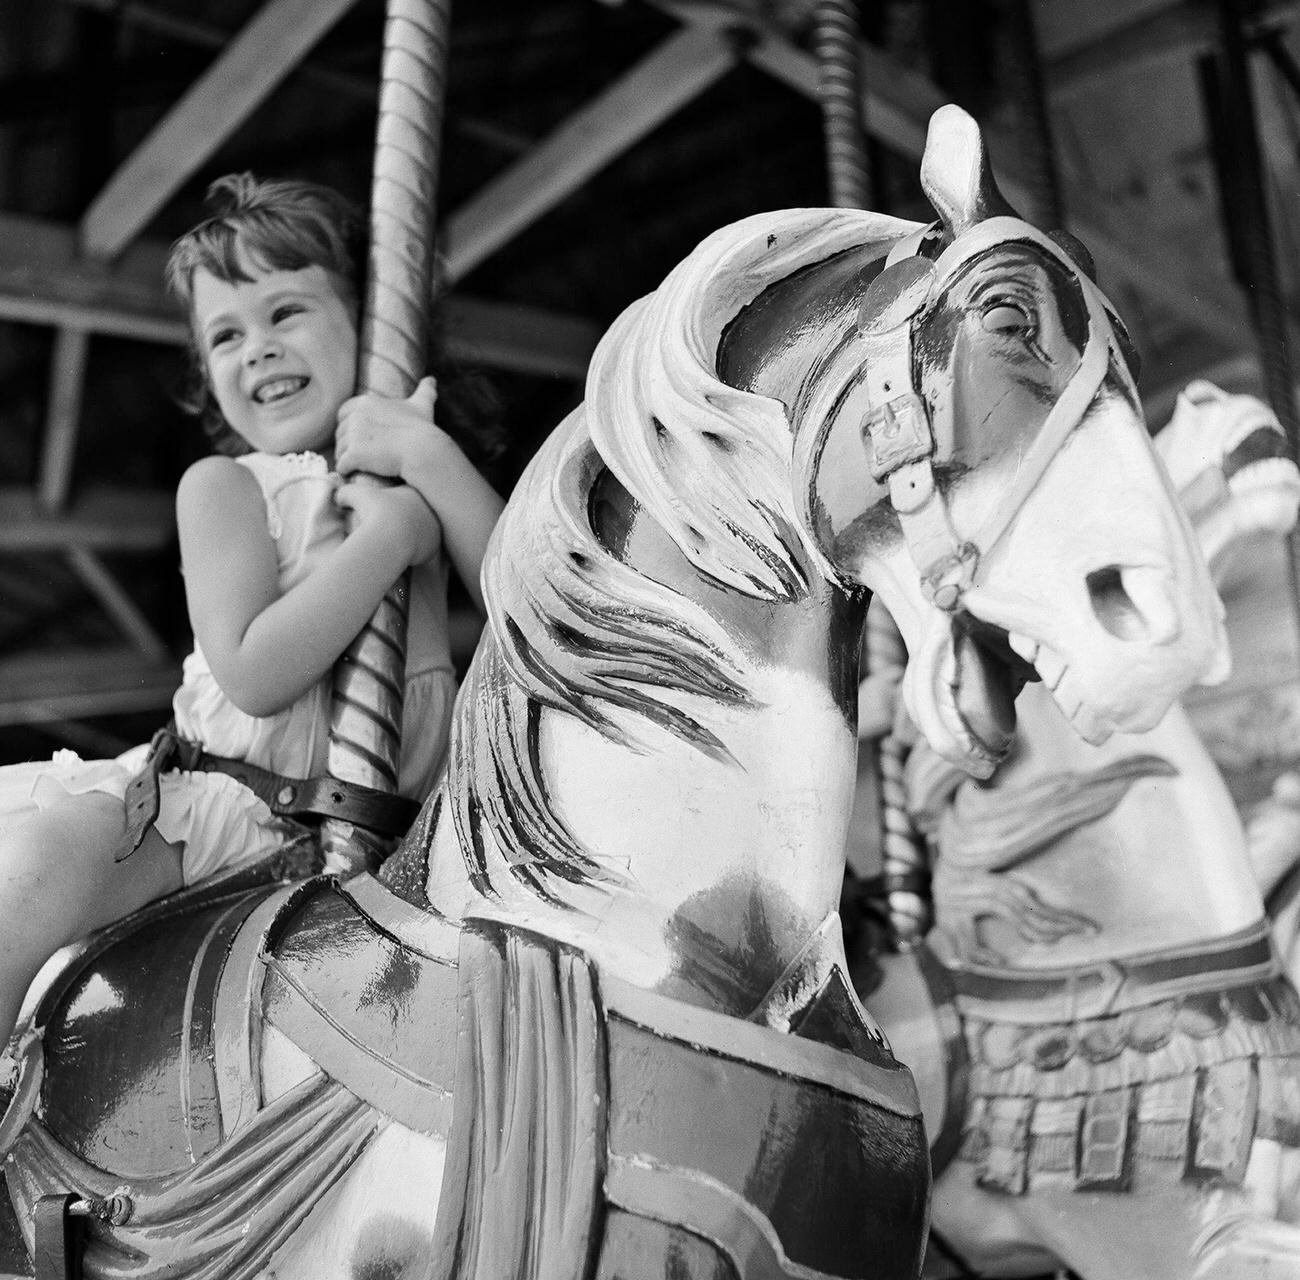 Young Girl Enjoys A Carousel Ride At Coney Island, 1948